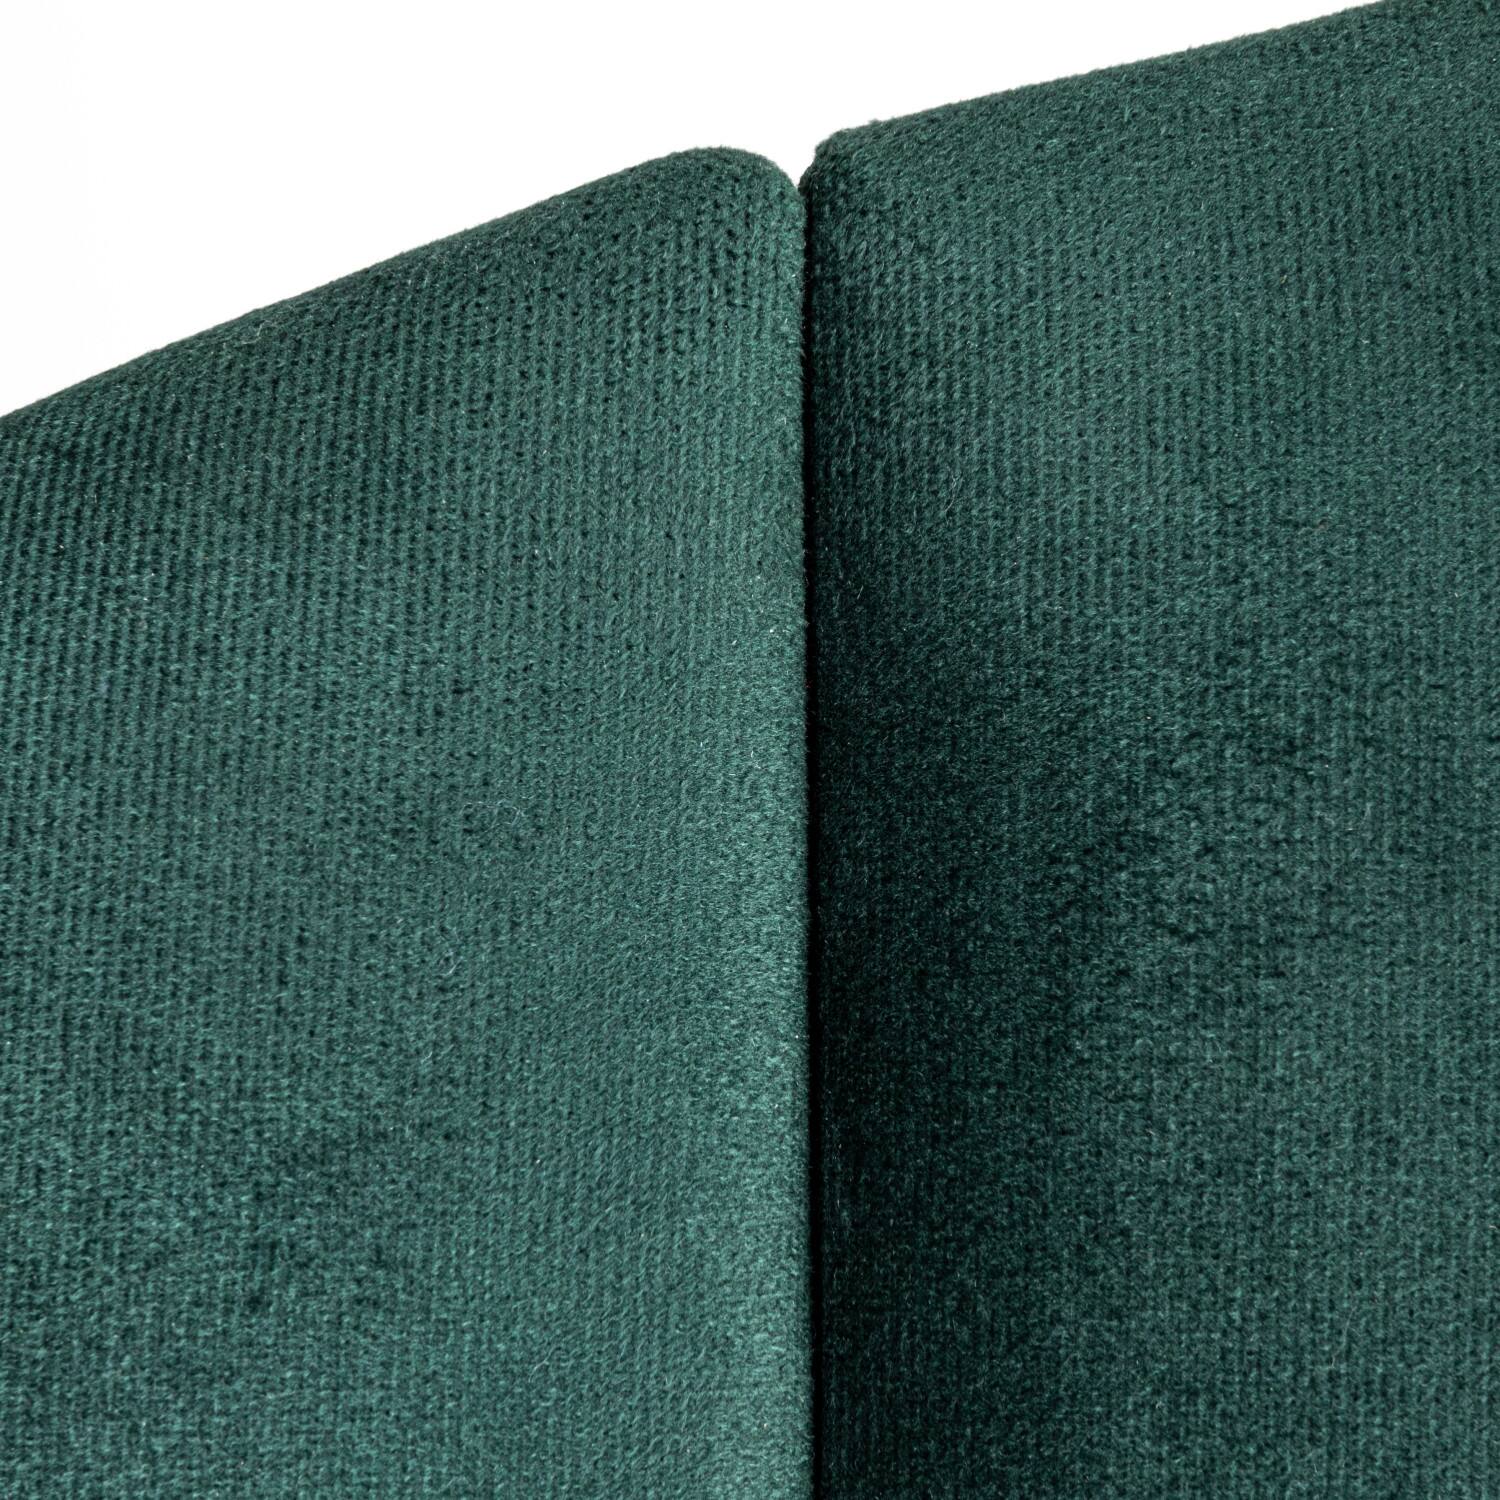 NoSom 5ft. Queen Sized Emerald Green Upholstered Velvet Panel Arched Headboard